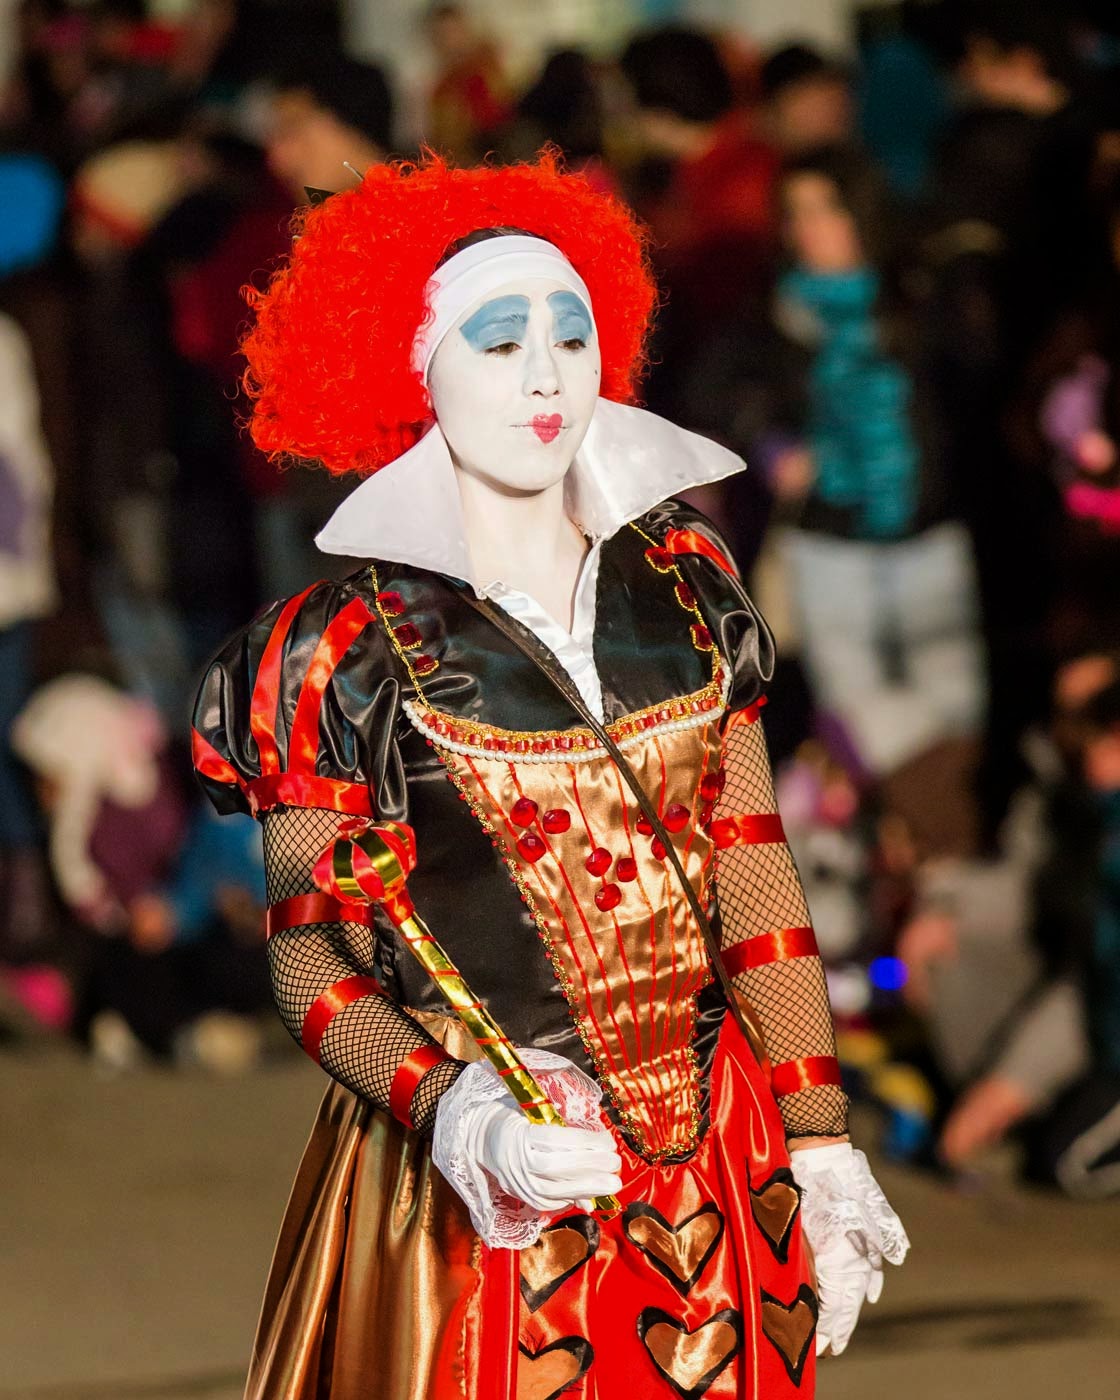 Jose E Hernandez World: Winter Carnival in Punta Arenas, Chile Posted 8 ...